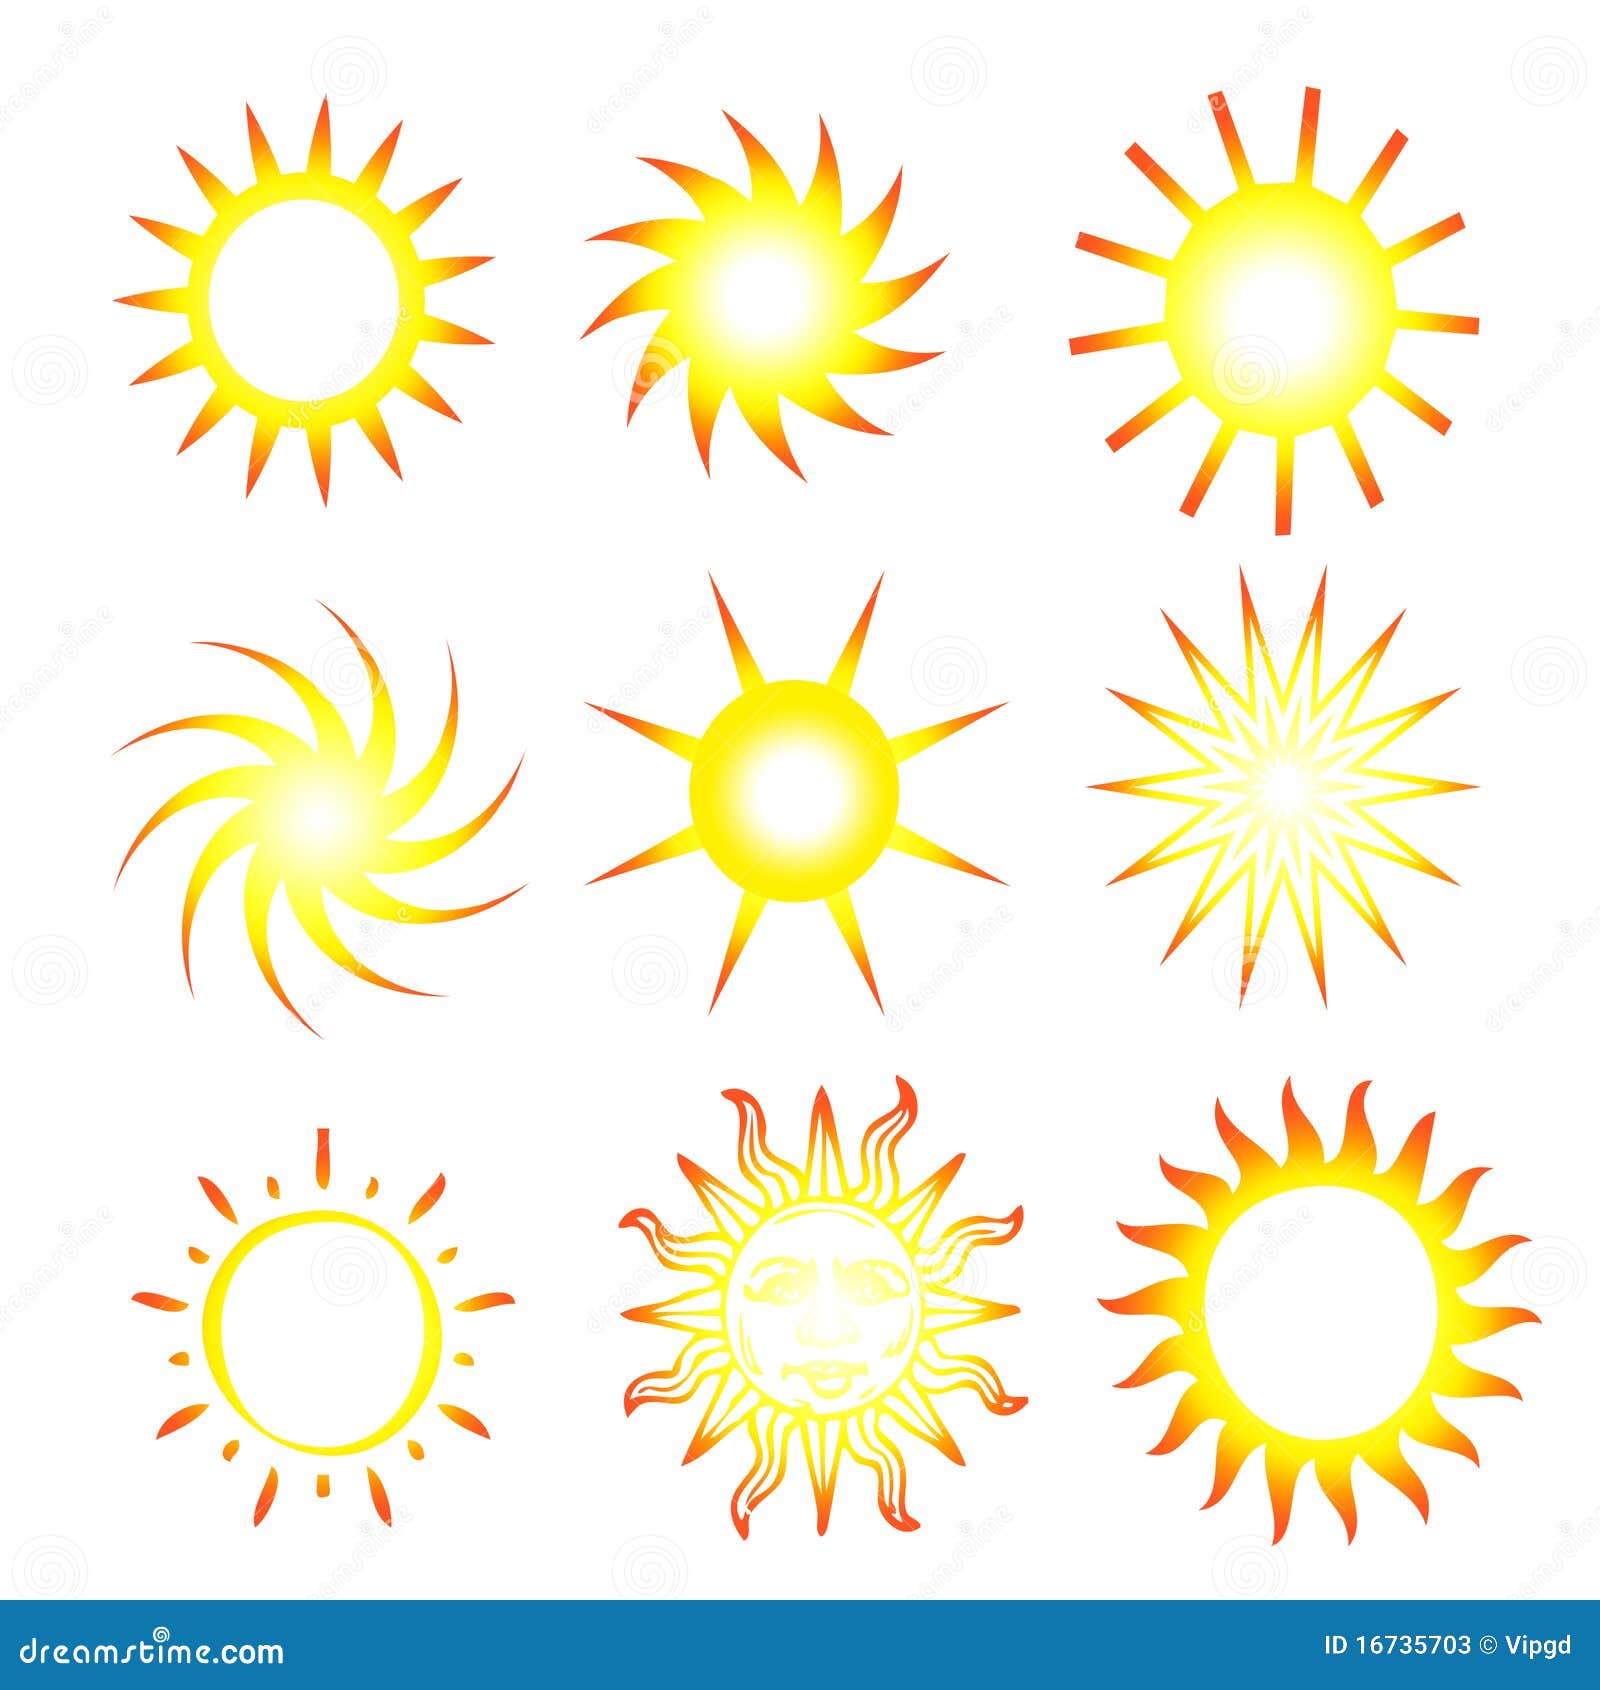 Sunny Suns stock illustration. Illustration of yellow - 16735703